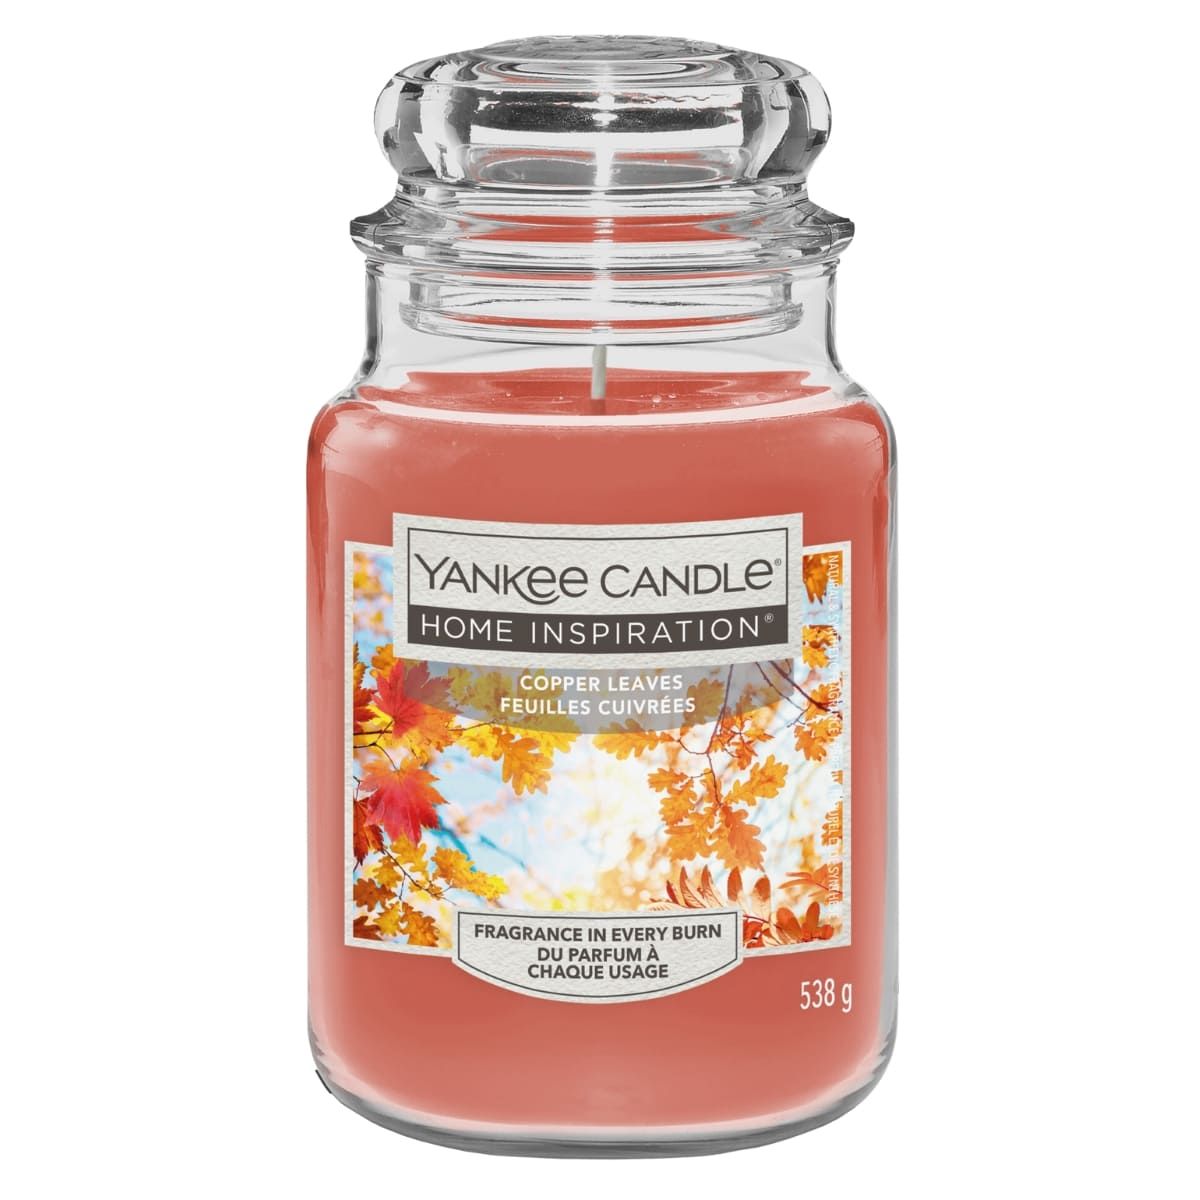 Ароматическая Свеча Yankee Candle Home Inspiration Copper Leaves, 538 гр yankee candle home inspiration sugar blossom большая ароматическая свеча 538 г